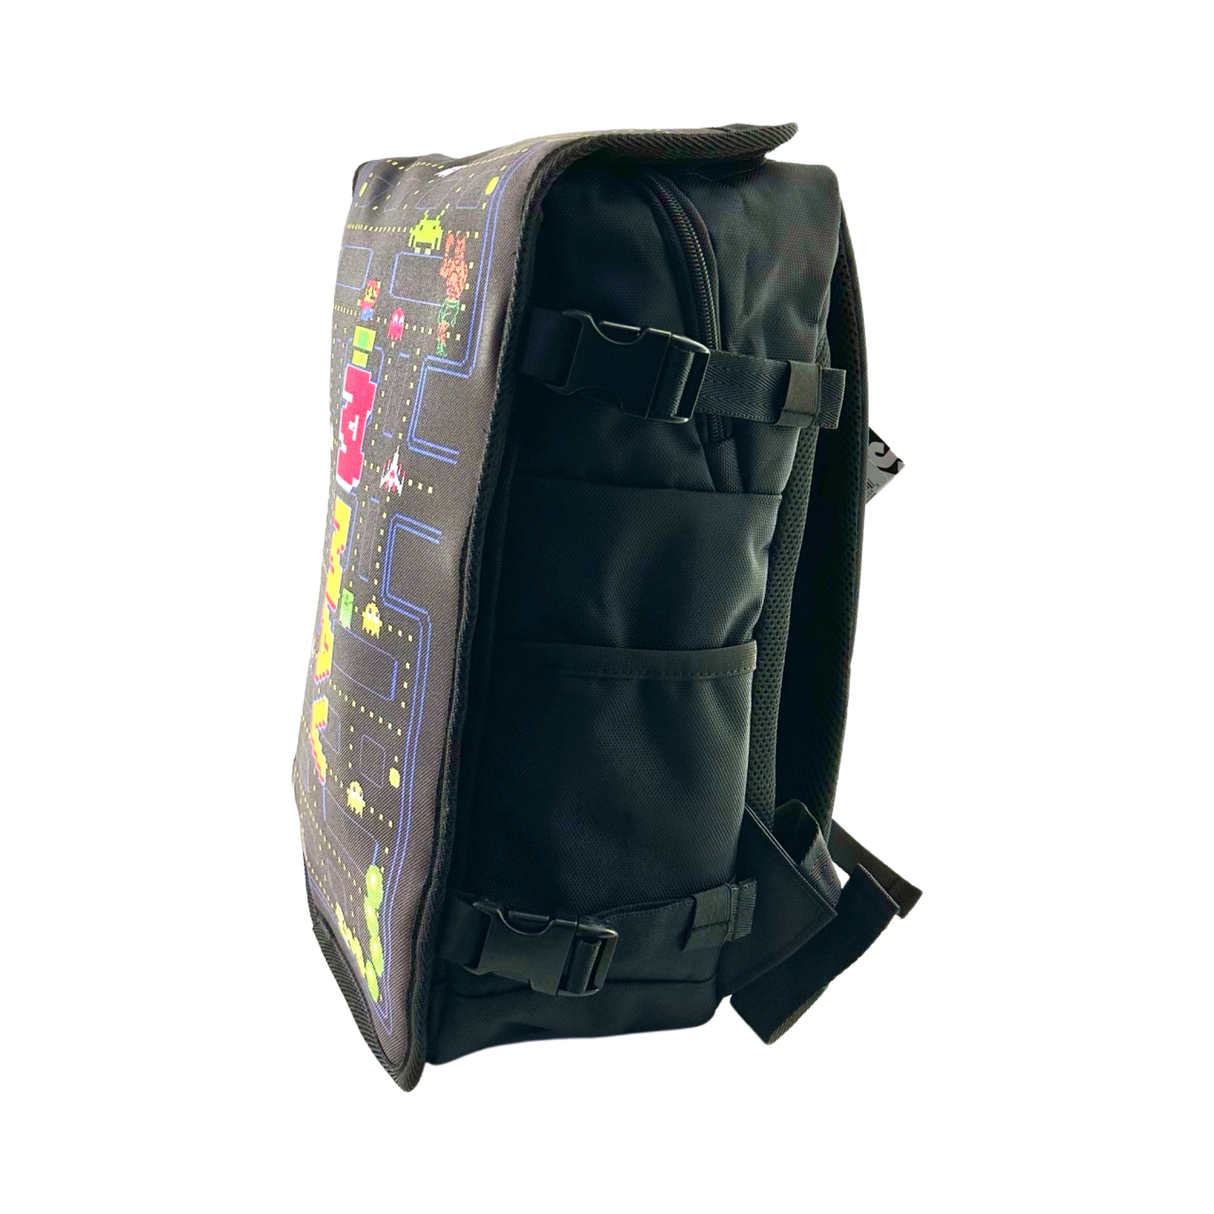 MAV PRO Skunk Faceoff backpack with vibrant game face design, side view, black straps